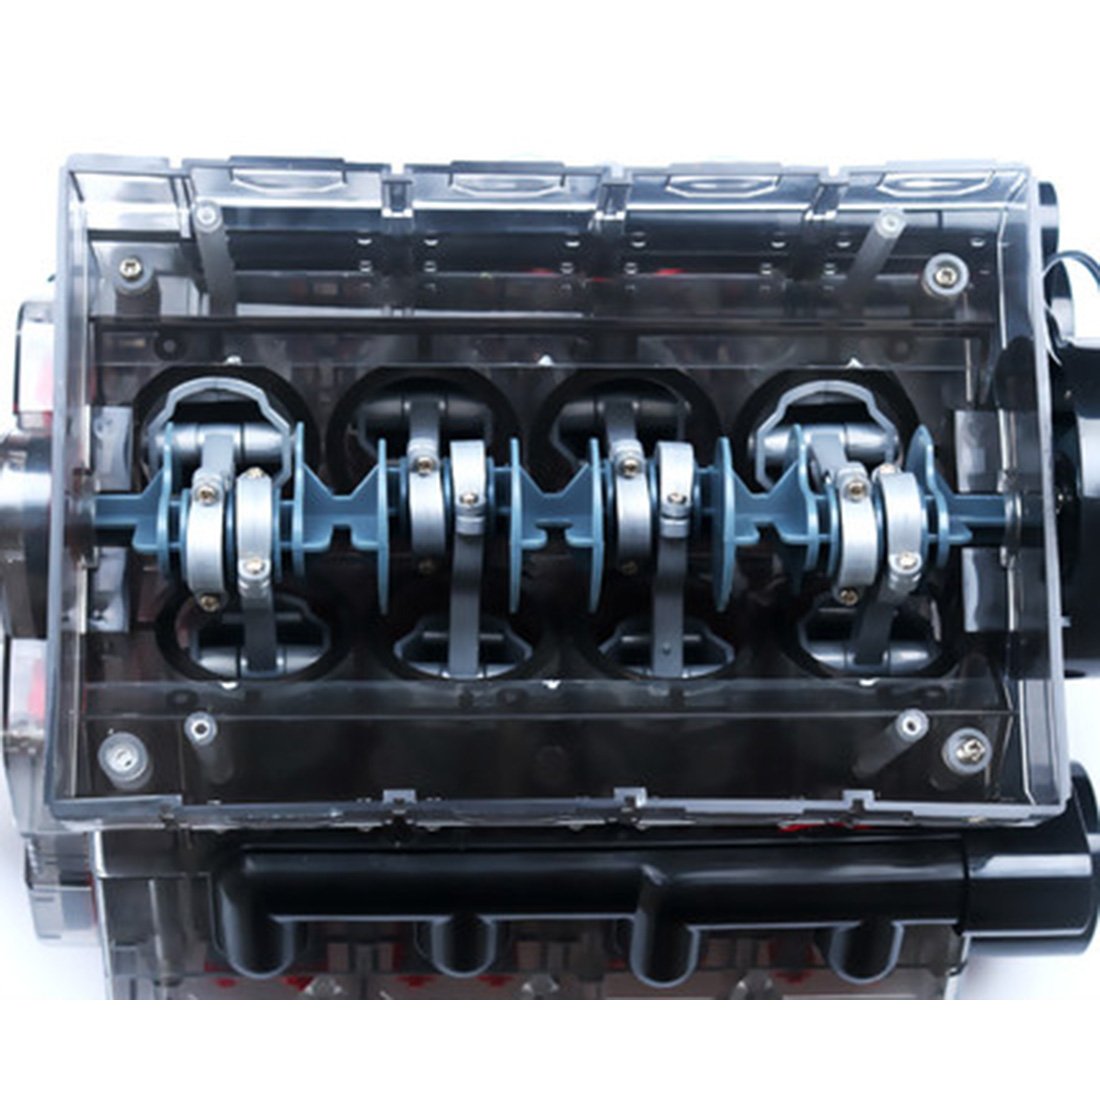 Assembly 270pcs V8 Car Engine Model Kit Science Experiment Puzzle Stem Toy